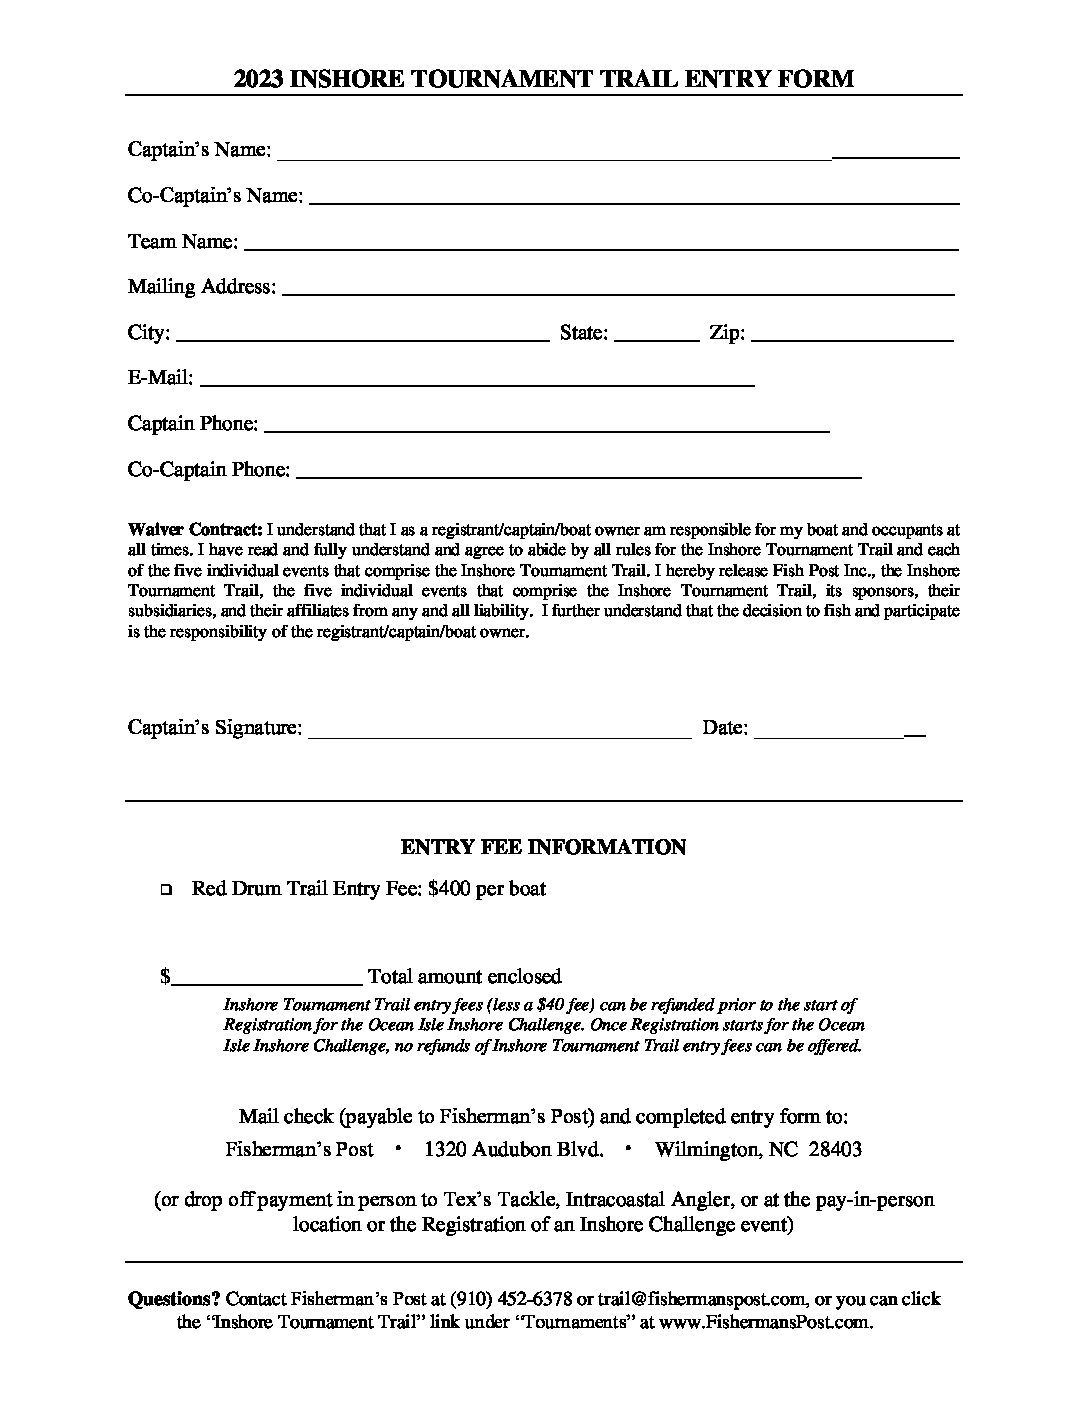 2023 Inshore Tournament Trail Print Entry Form